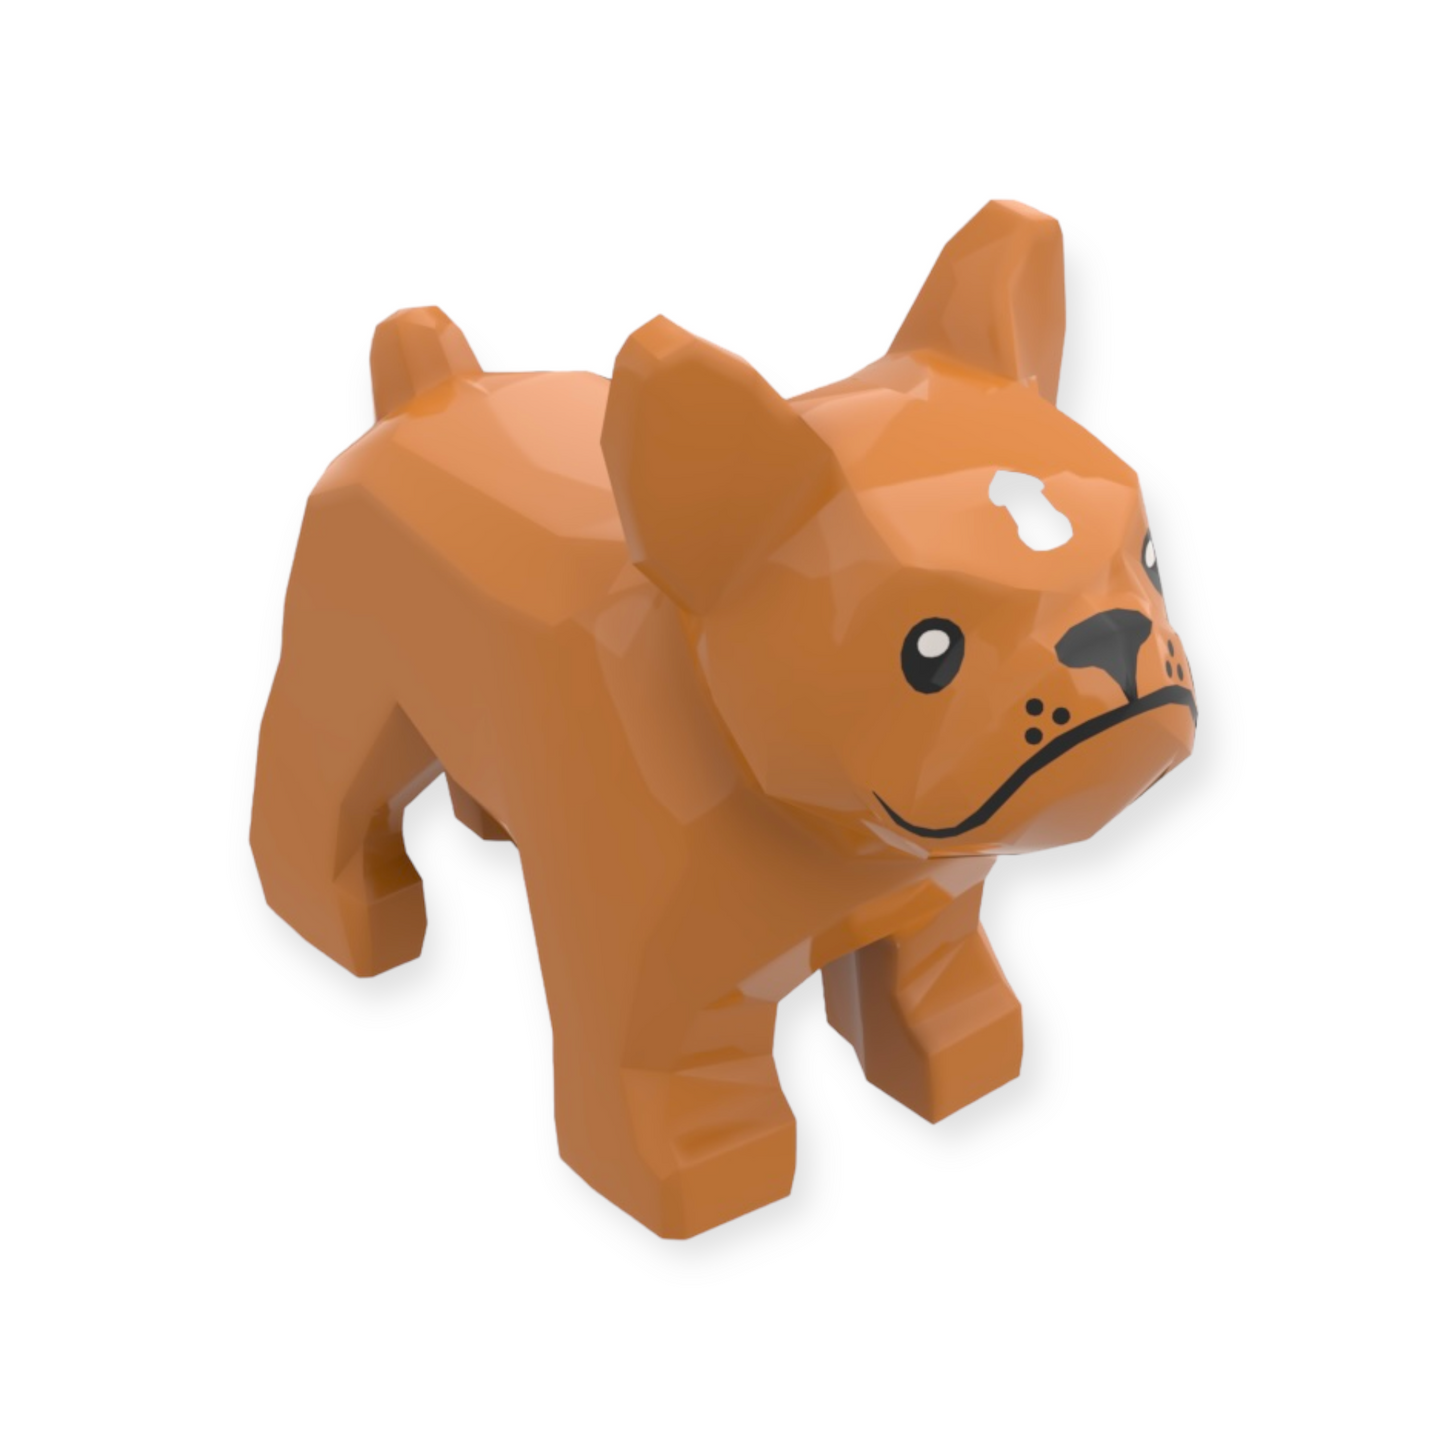 LEGO Hund - French Bulldog with Black Eyes Nose Mouth in Medium Nougat